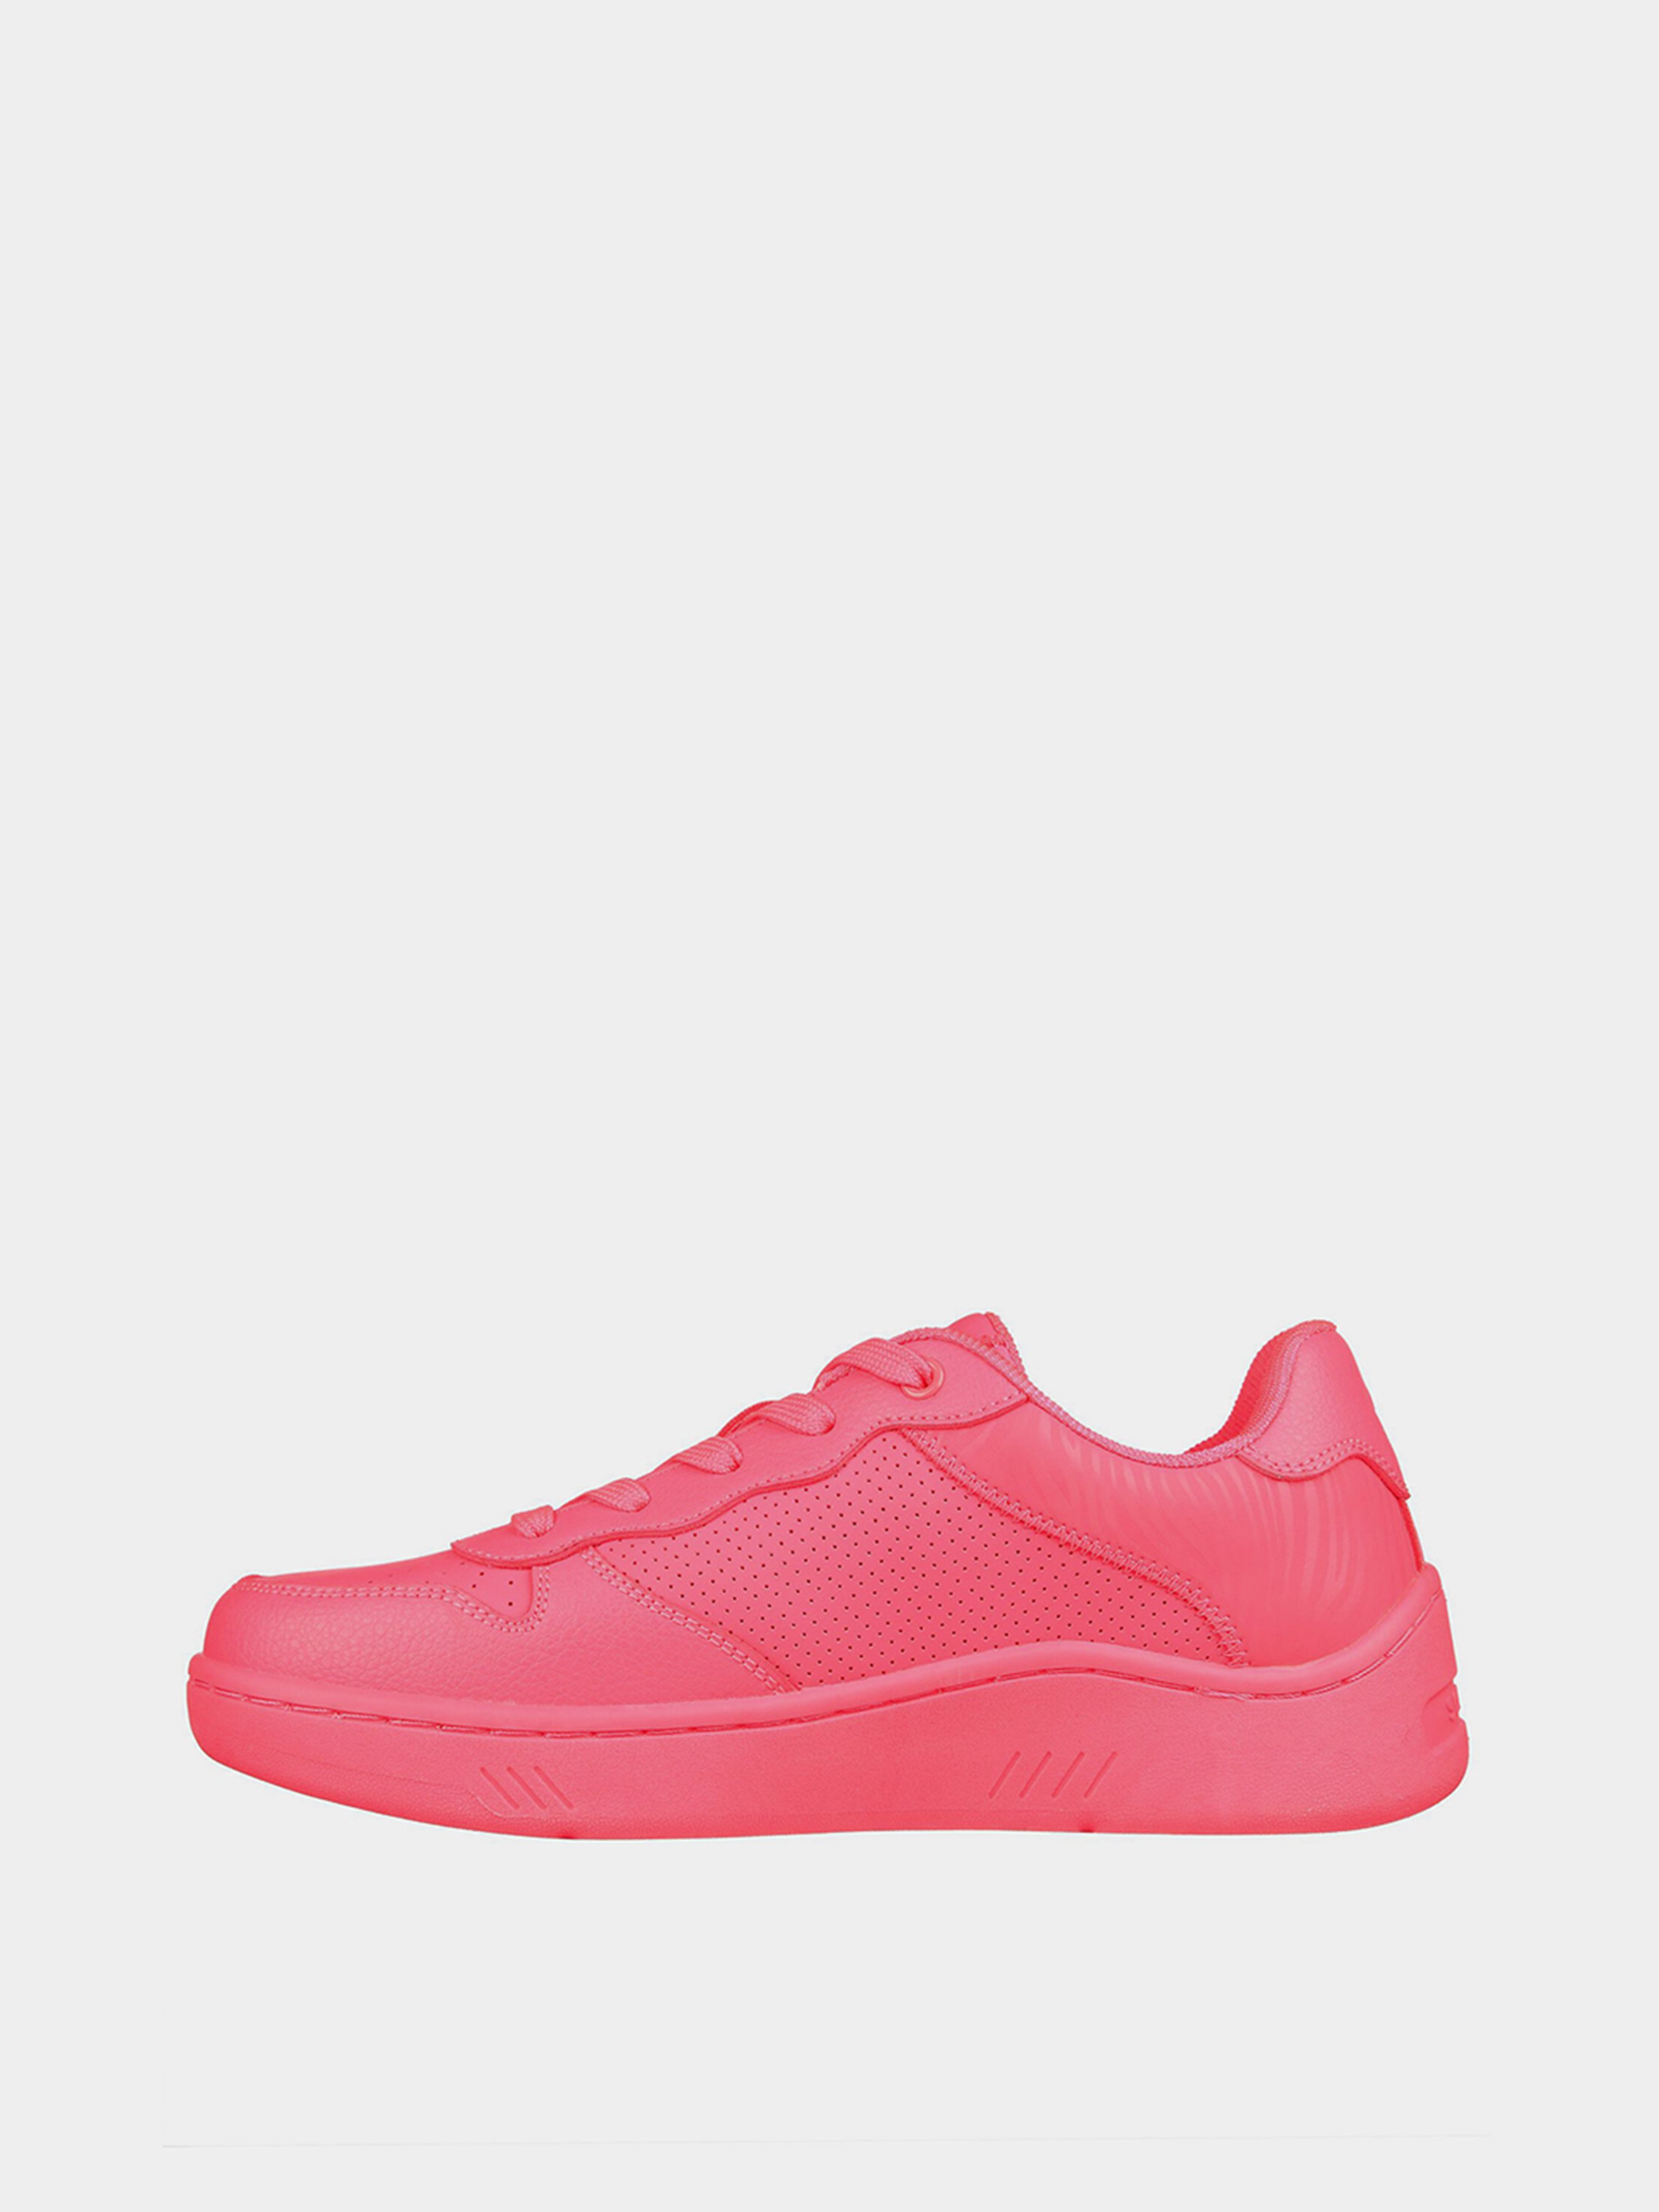 

Skechers Upbeats - Bright Court Кеды низкие (KW6827) Женское, цвет - Розовый, материал - Текстиль